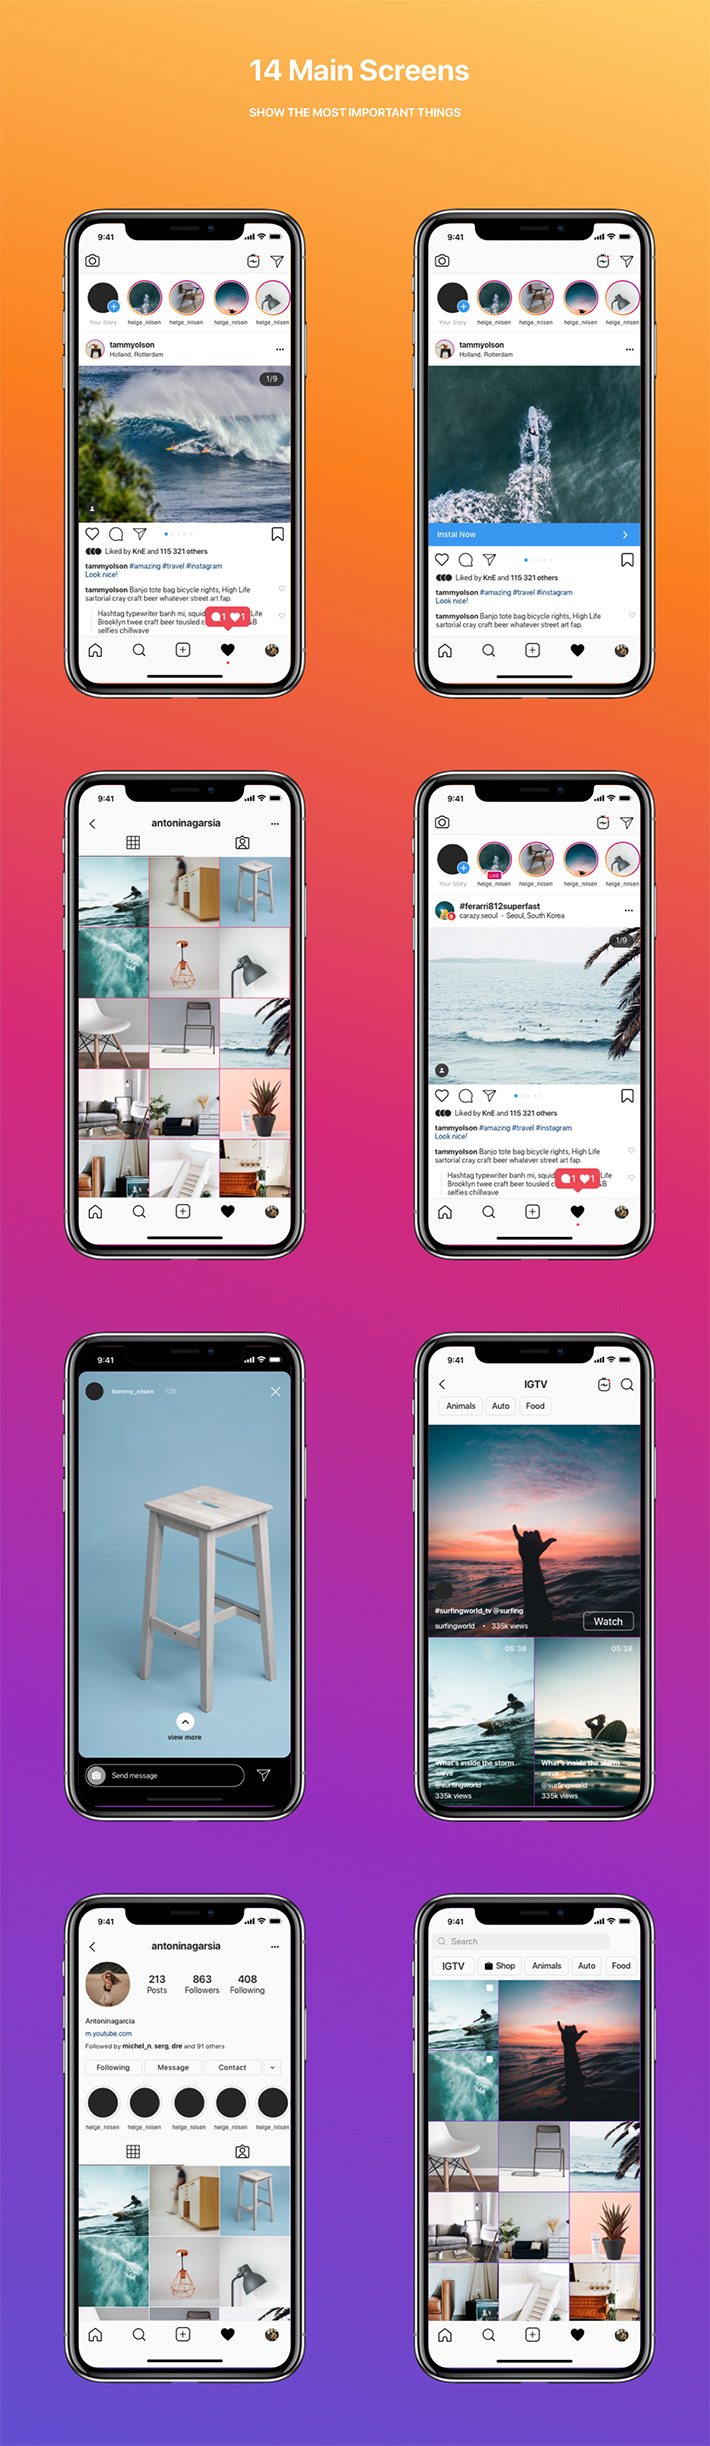 Instagram UI Kit 2018 - 9 Screens - FREE PSD & Sketch 